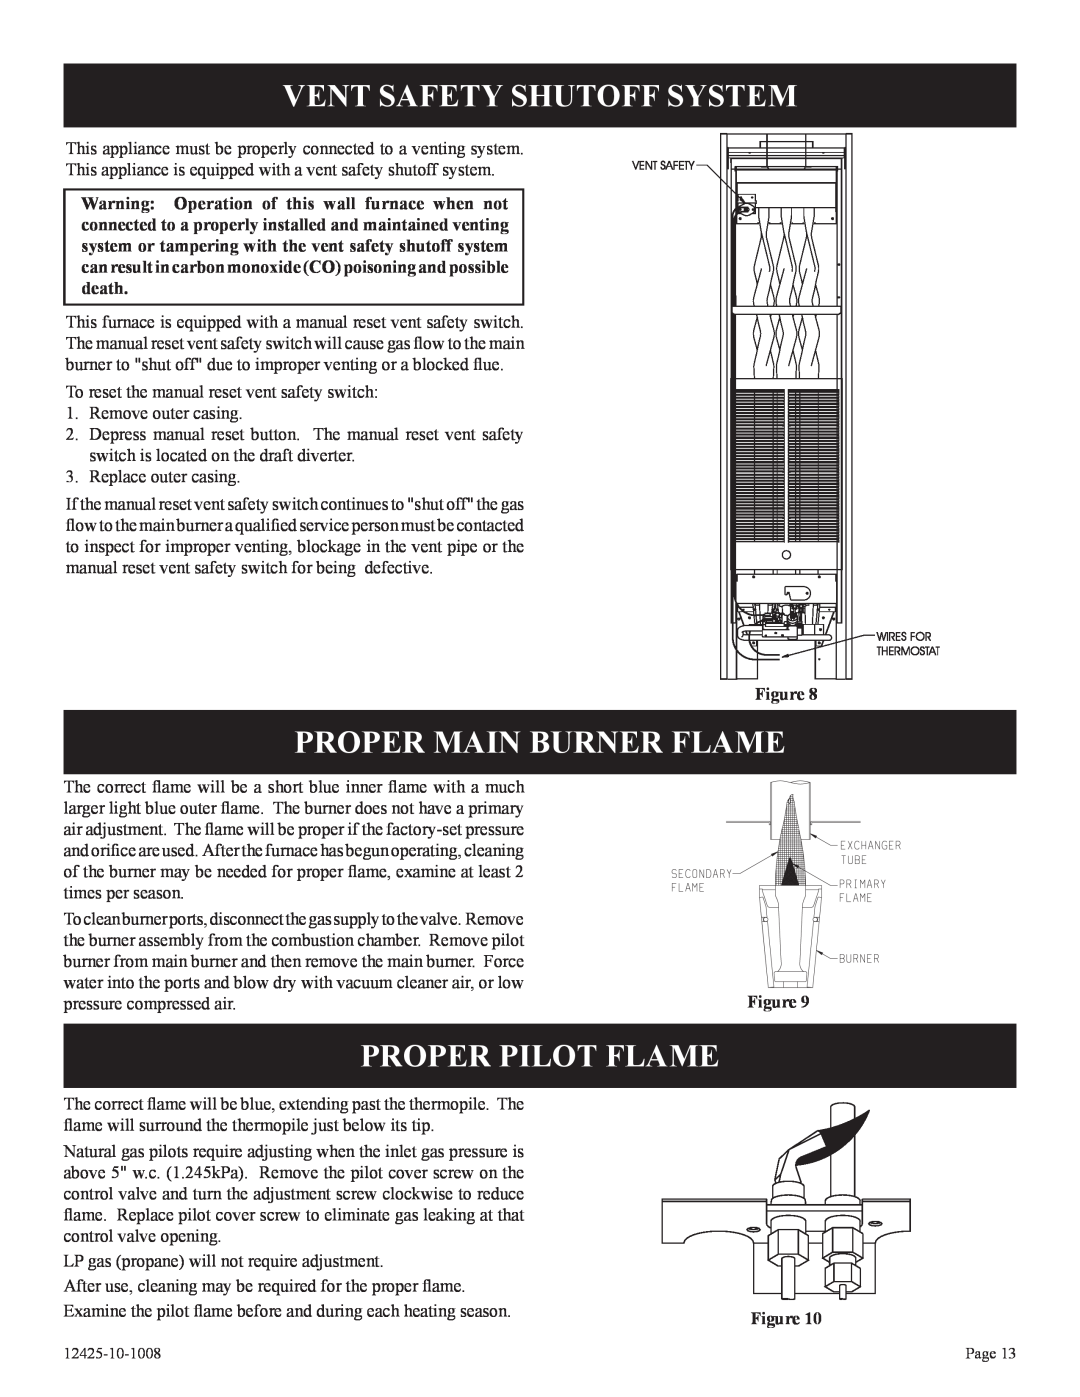 Empire Products GWT-35-2(SG, GWT-25-2(SG Vent Safety Shutoff System, Proper Main Burner Flame, Proper Pilot Flame 